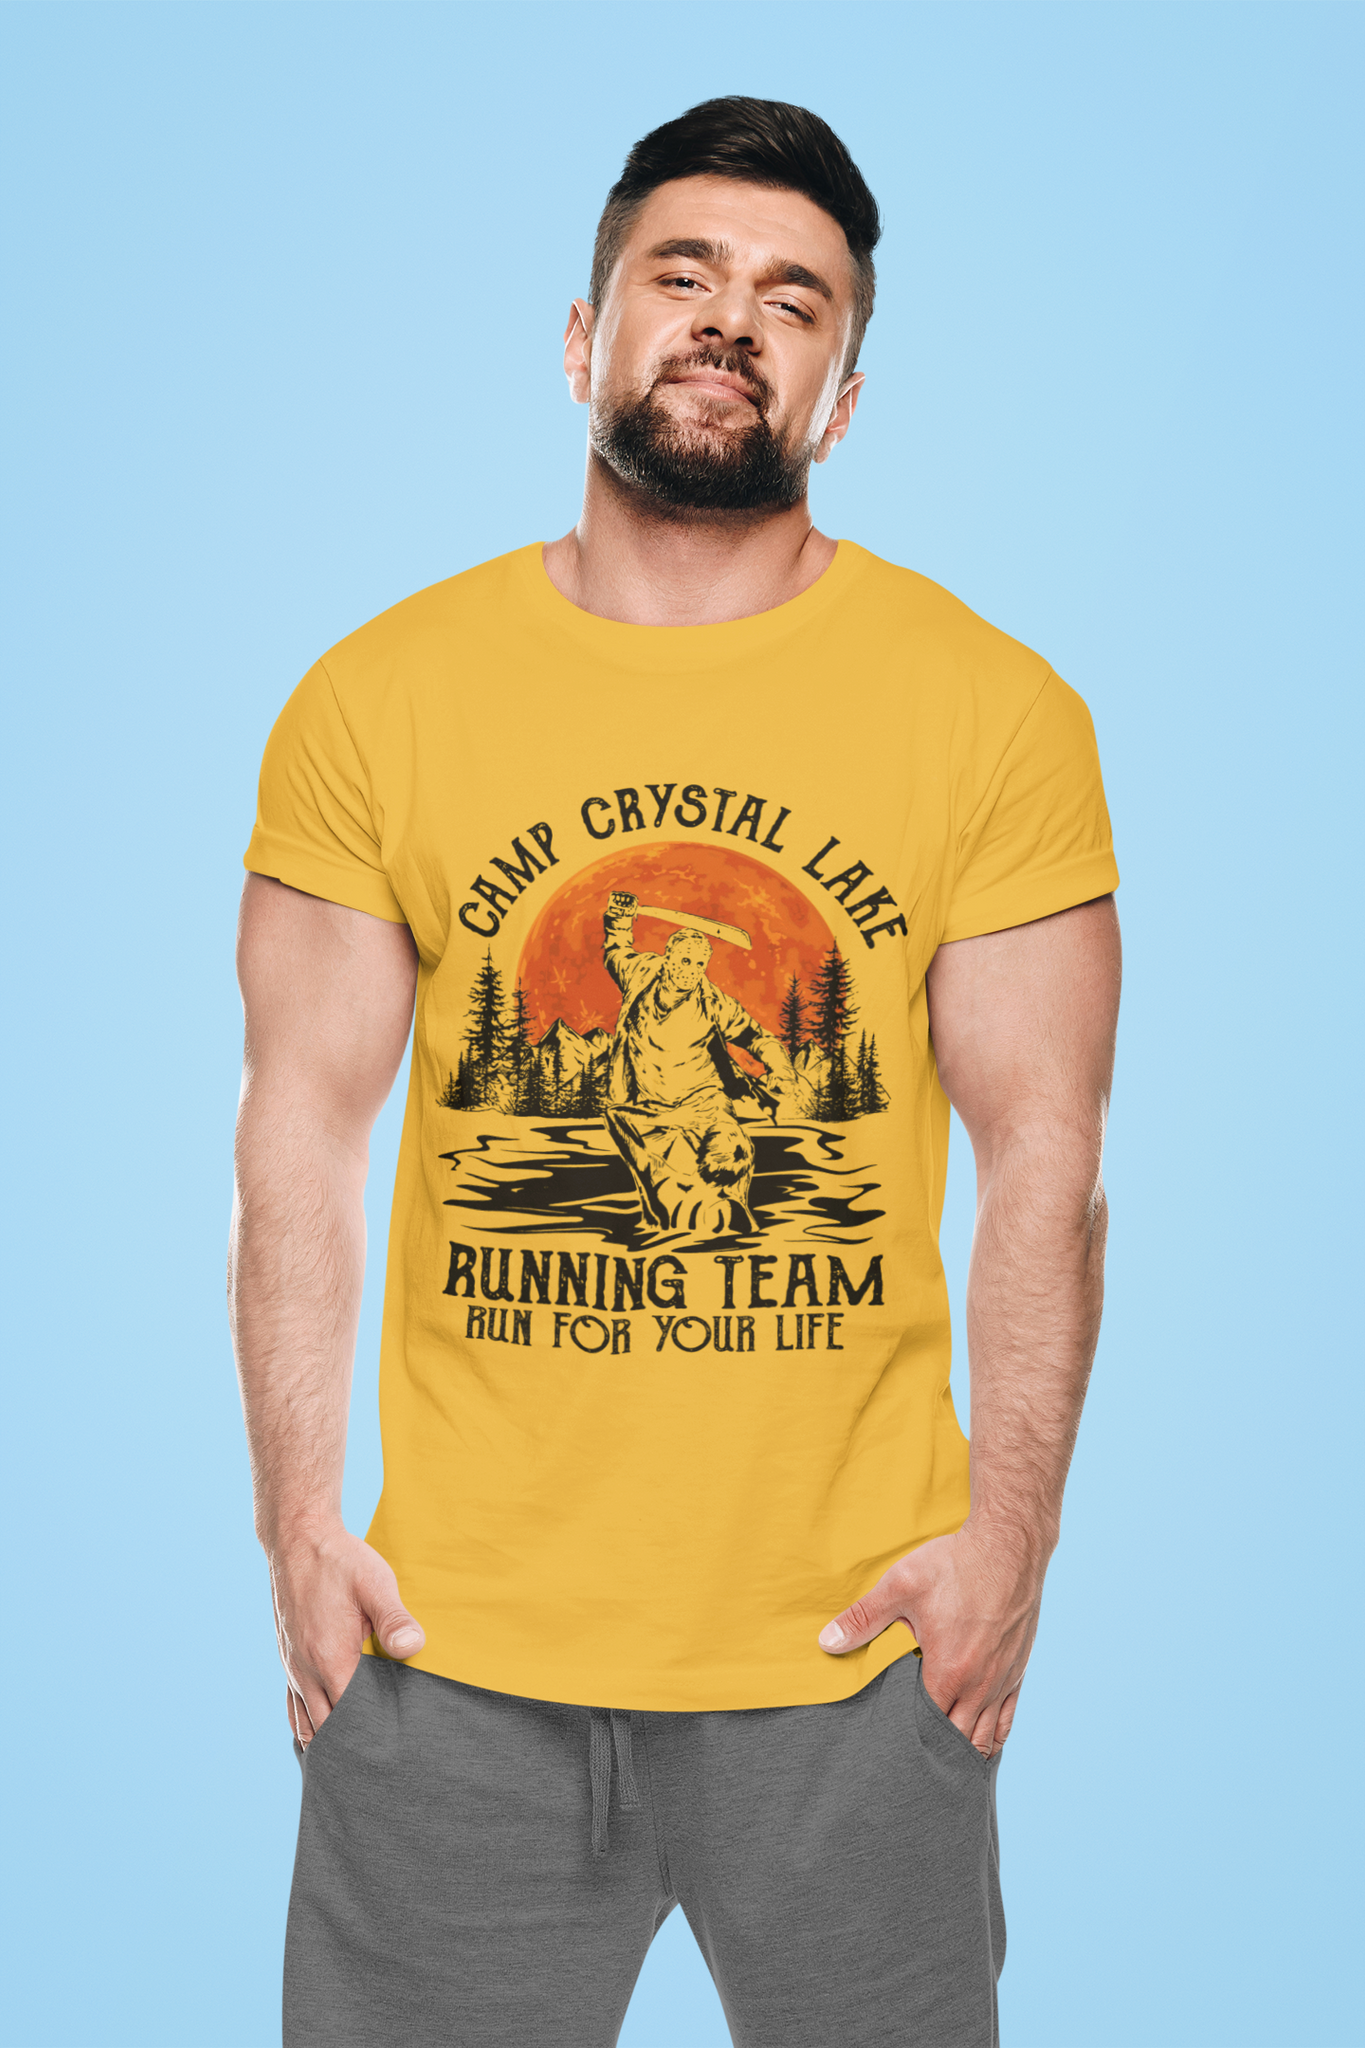 Friday 13th T Shirt, Camp Crystal Lake Running Team Tshirt, Jason Voorhees T Shirt, Halloween Gifts